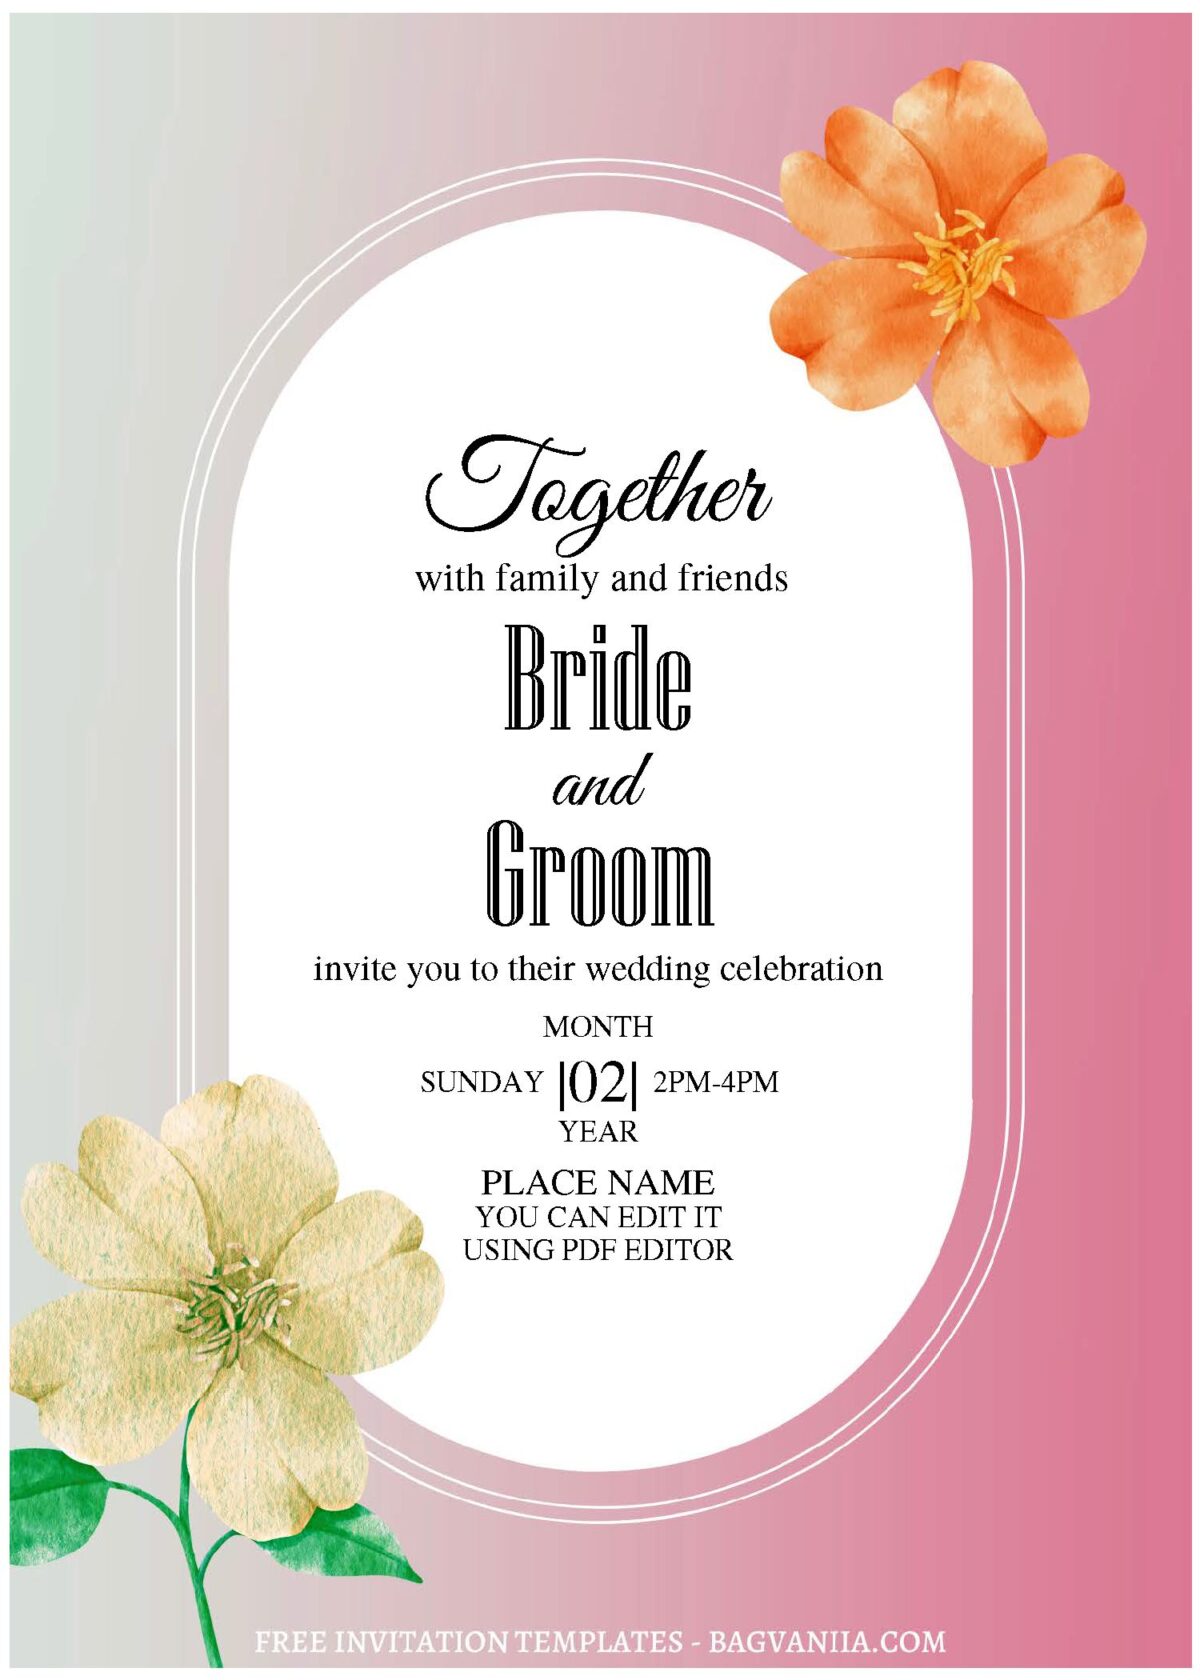 (Free Editable PDF) Minimalist Watercolor Floral Wedding Invitation Templates with elegant typefaces